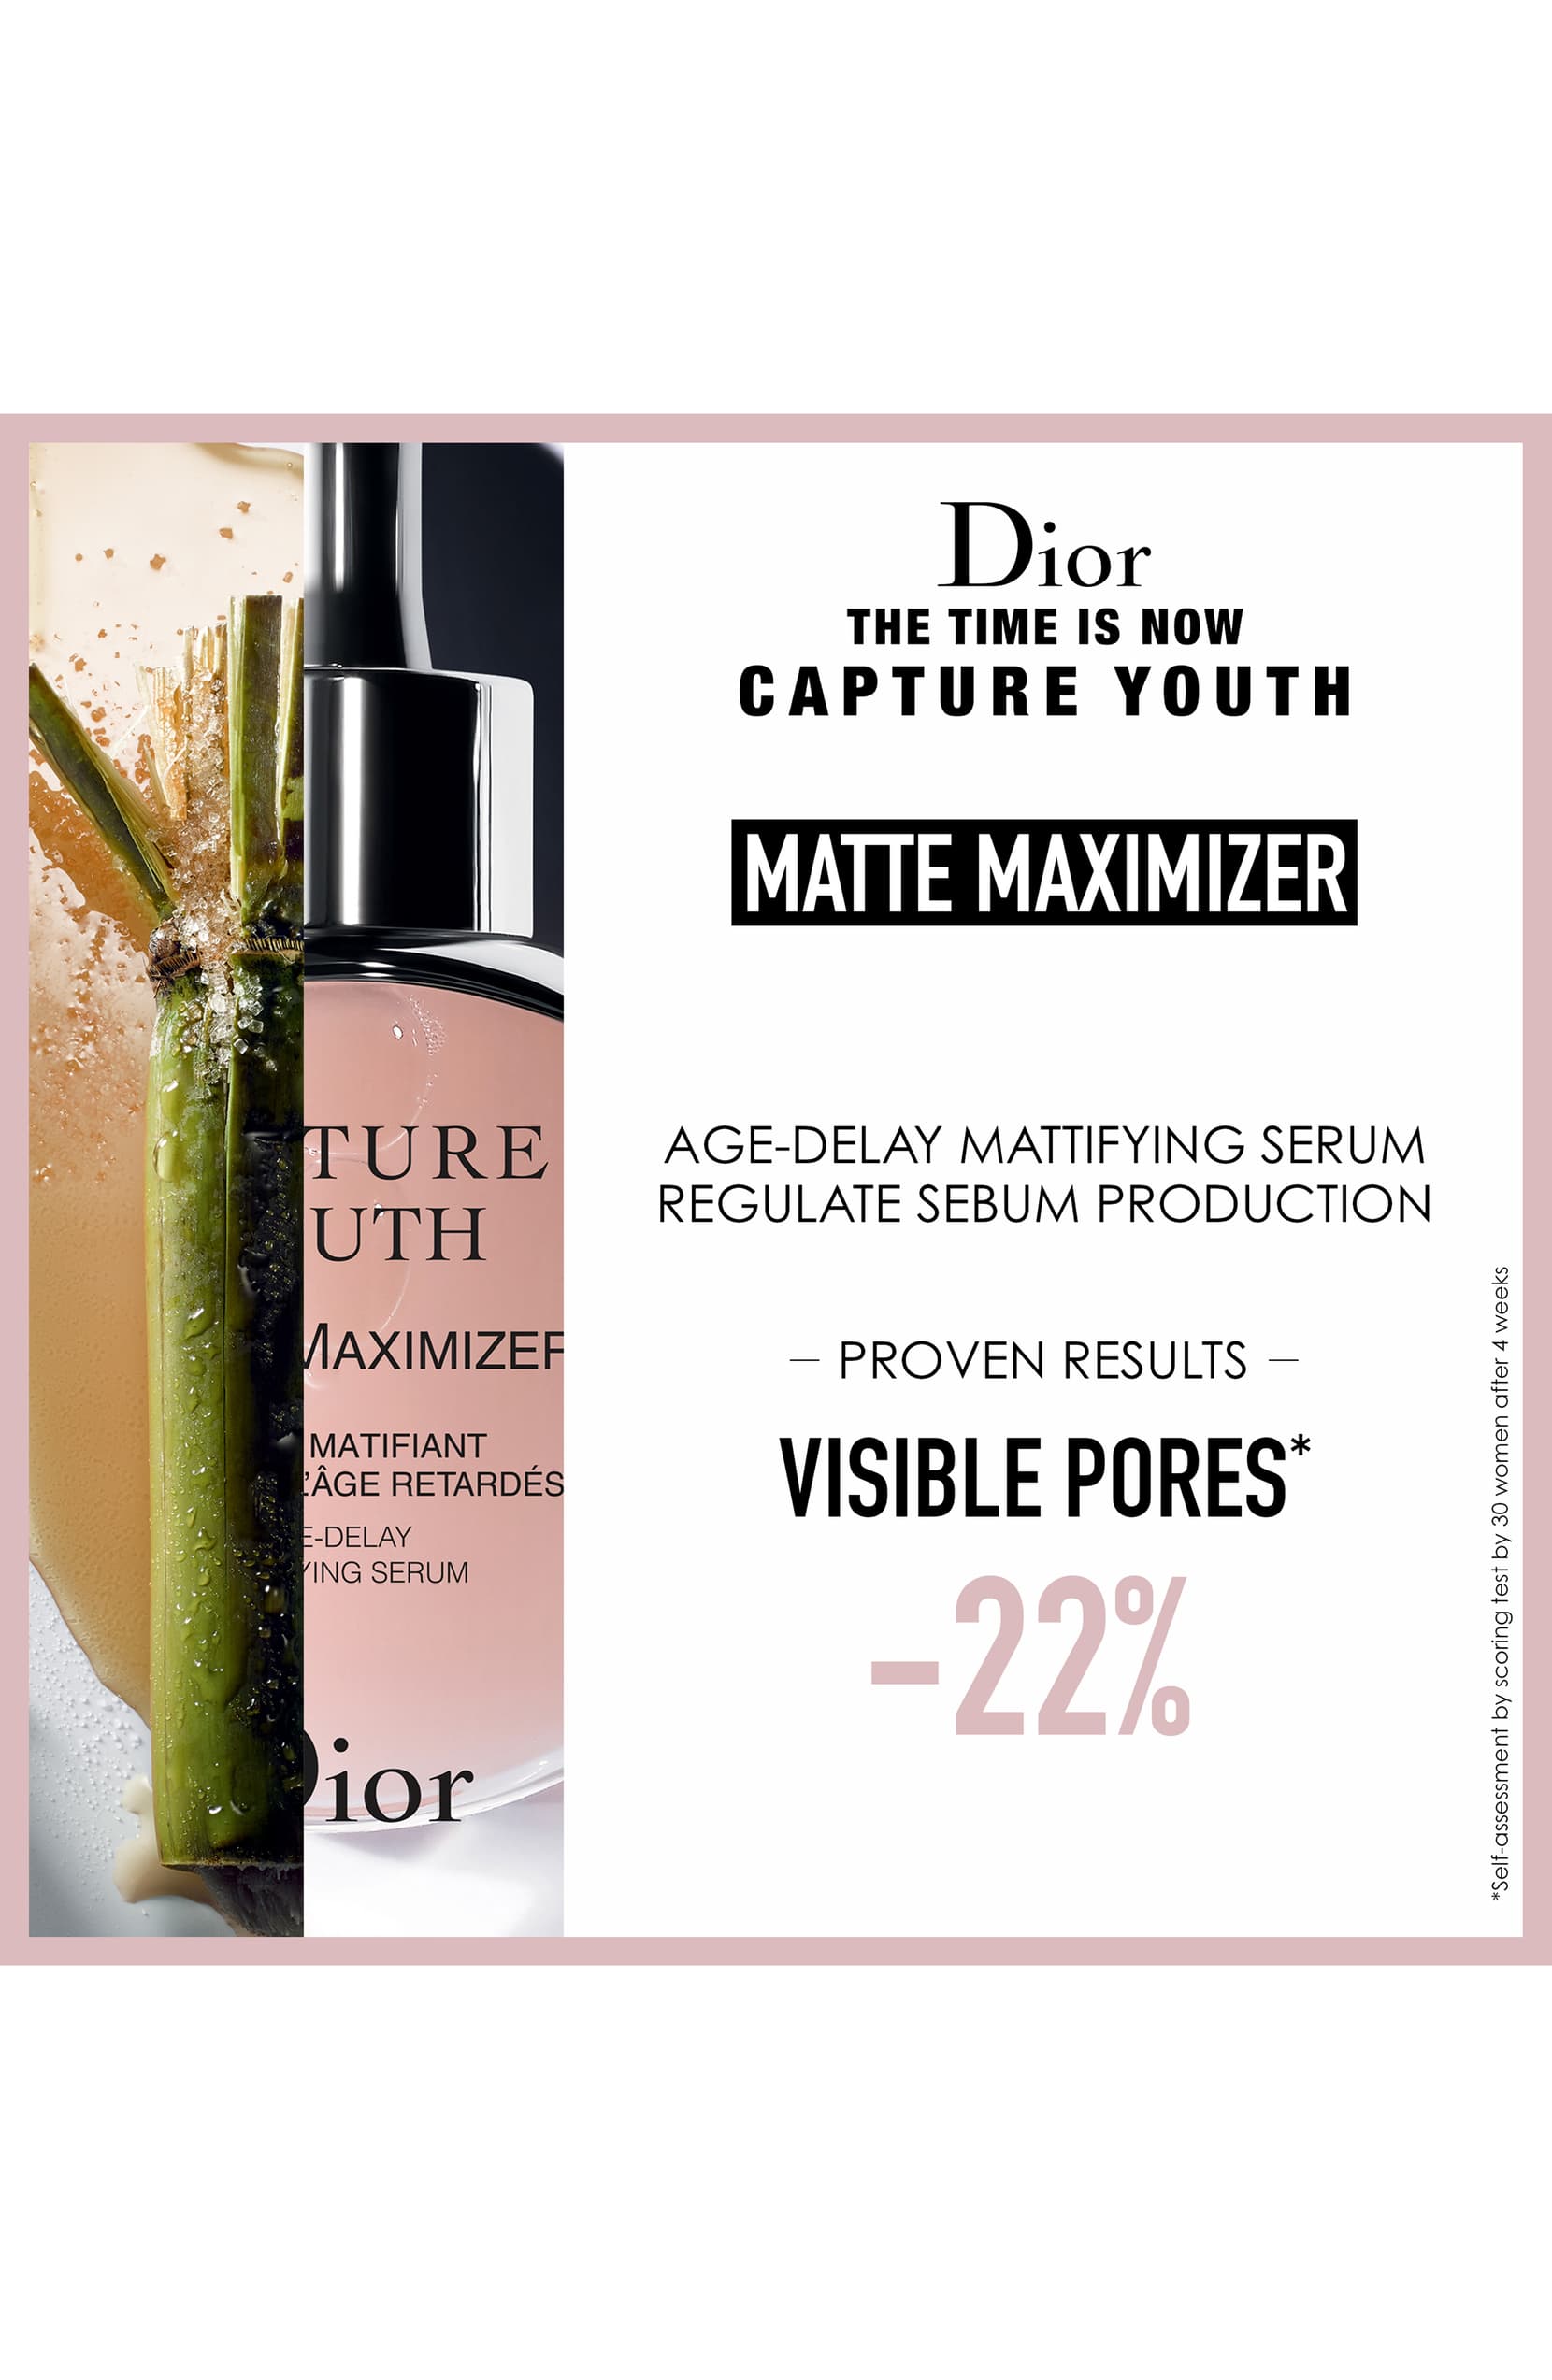 Dior Capture Youth Matte Maximizer Age-Delay Mattifying Serum